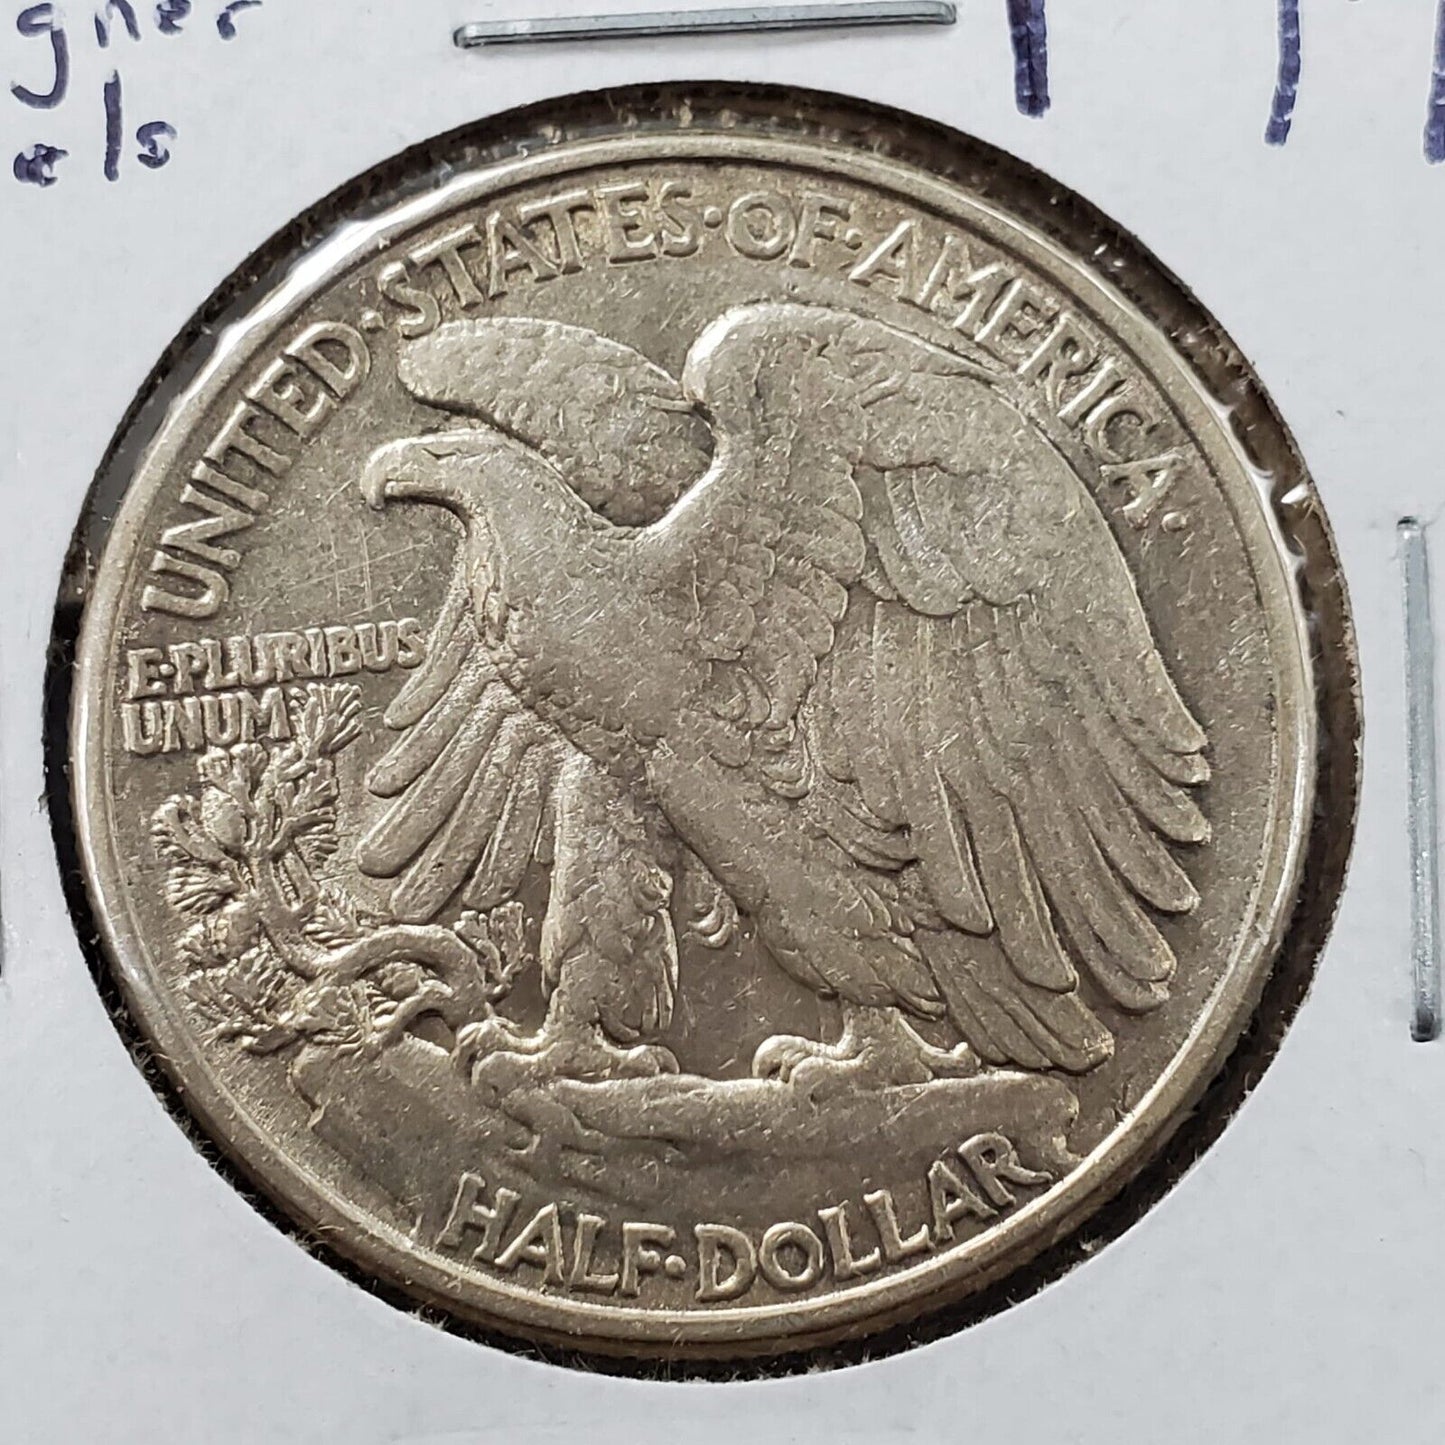 1945 P Walking Liberty Half Dollar Coin FS-901 MISSING INITIALS ERROR Variety 2